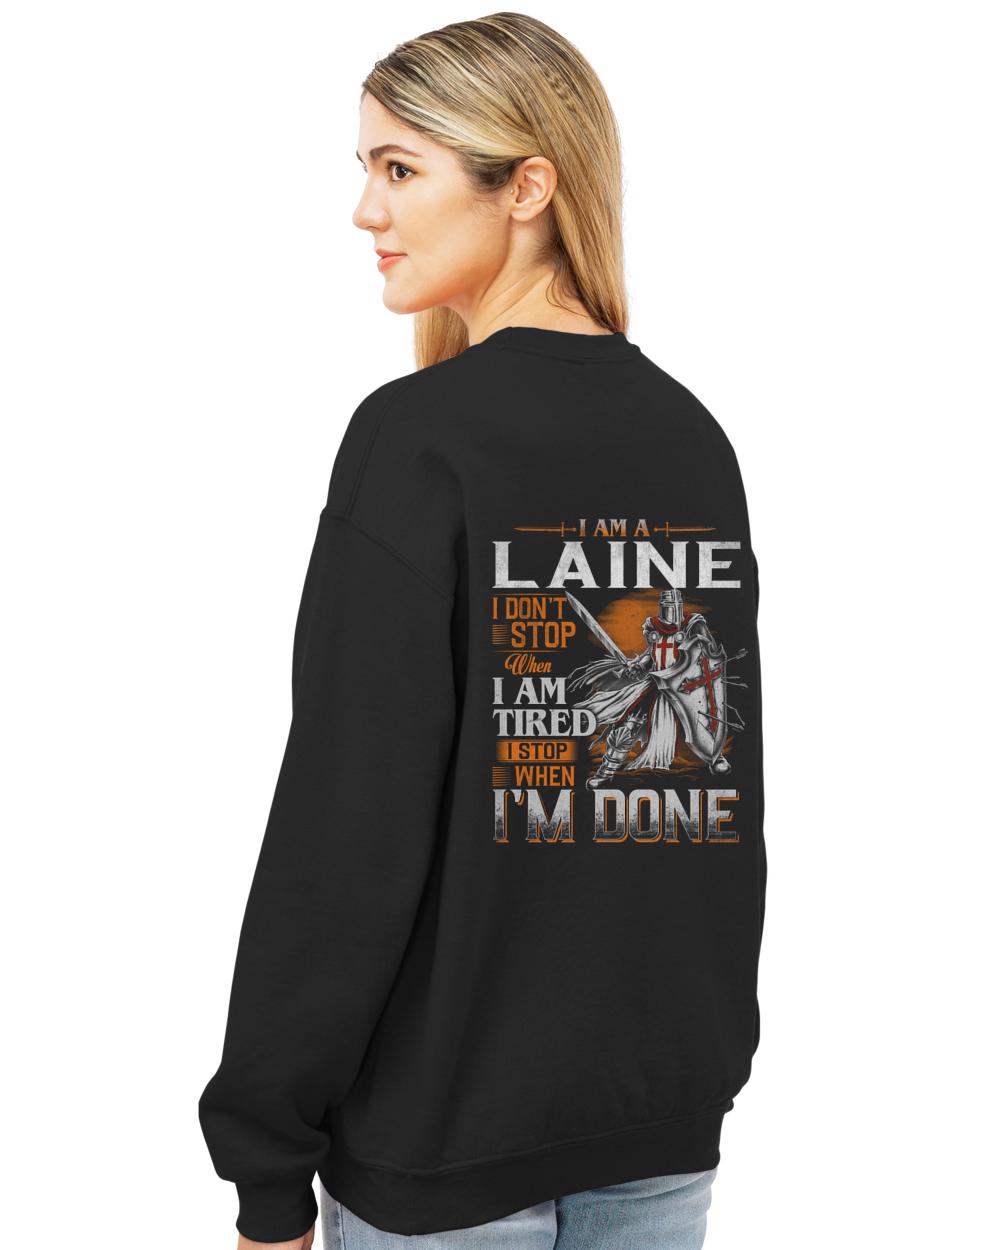 LAINE-13K-57-01